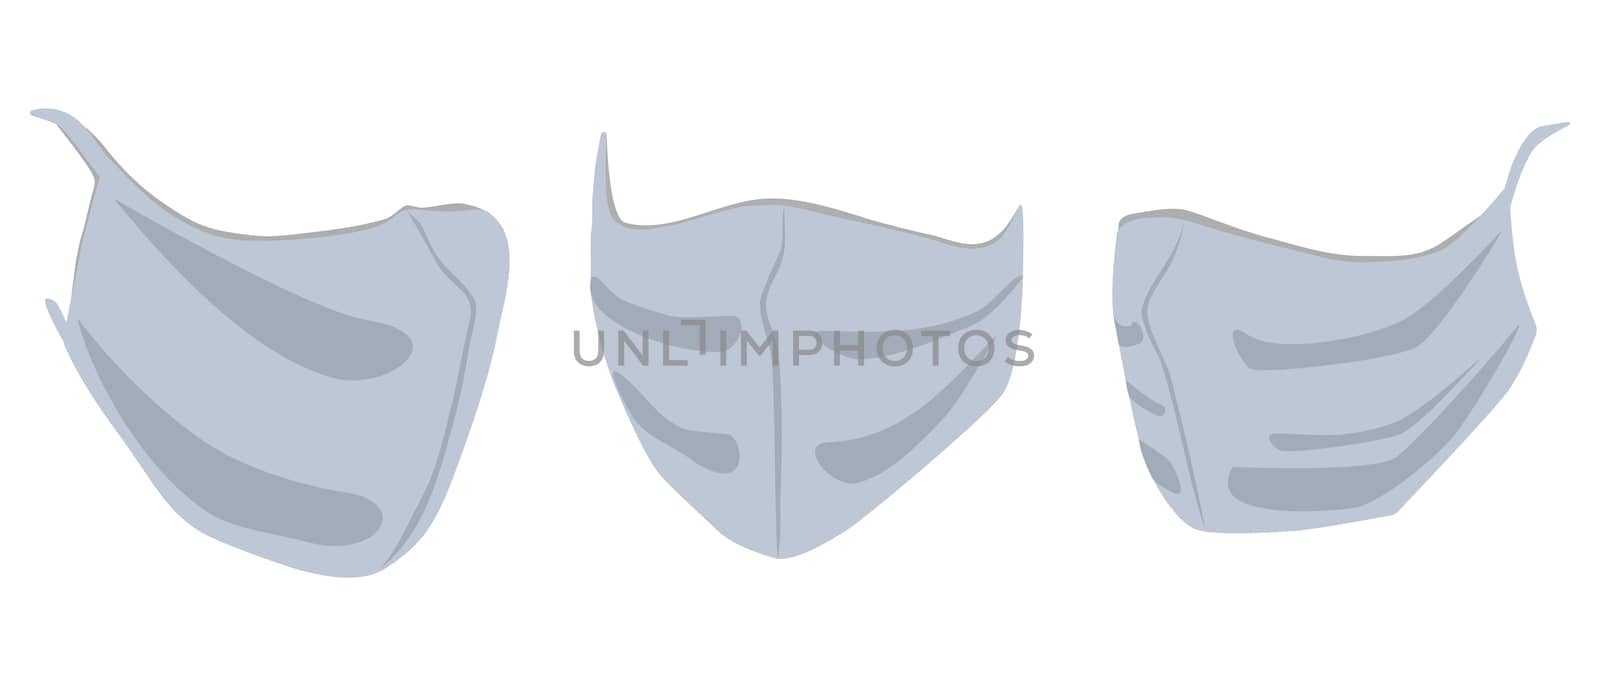 Grey protective medical mask. Hygiene mask PPE by Nata_Prando